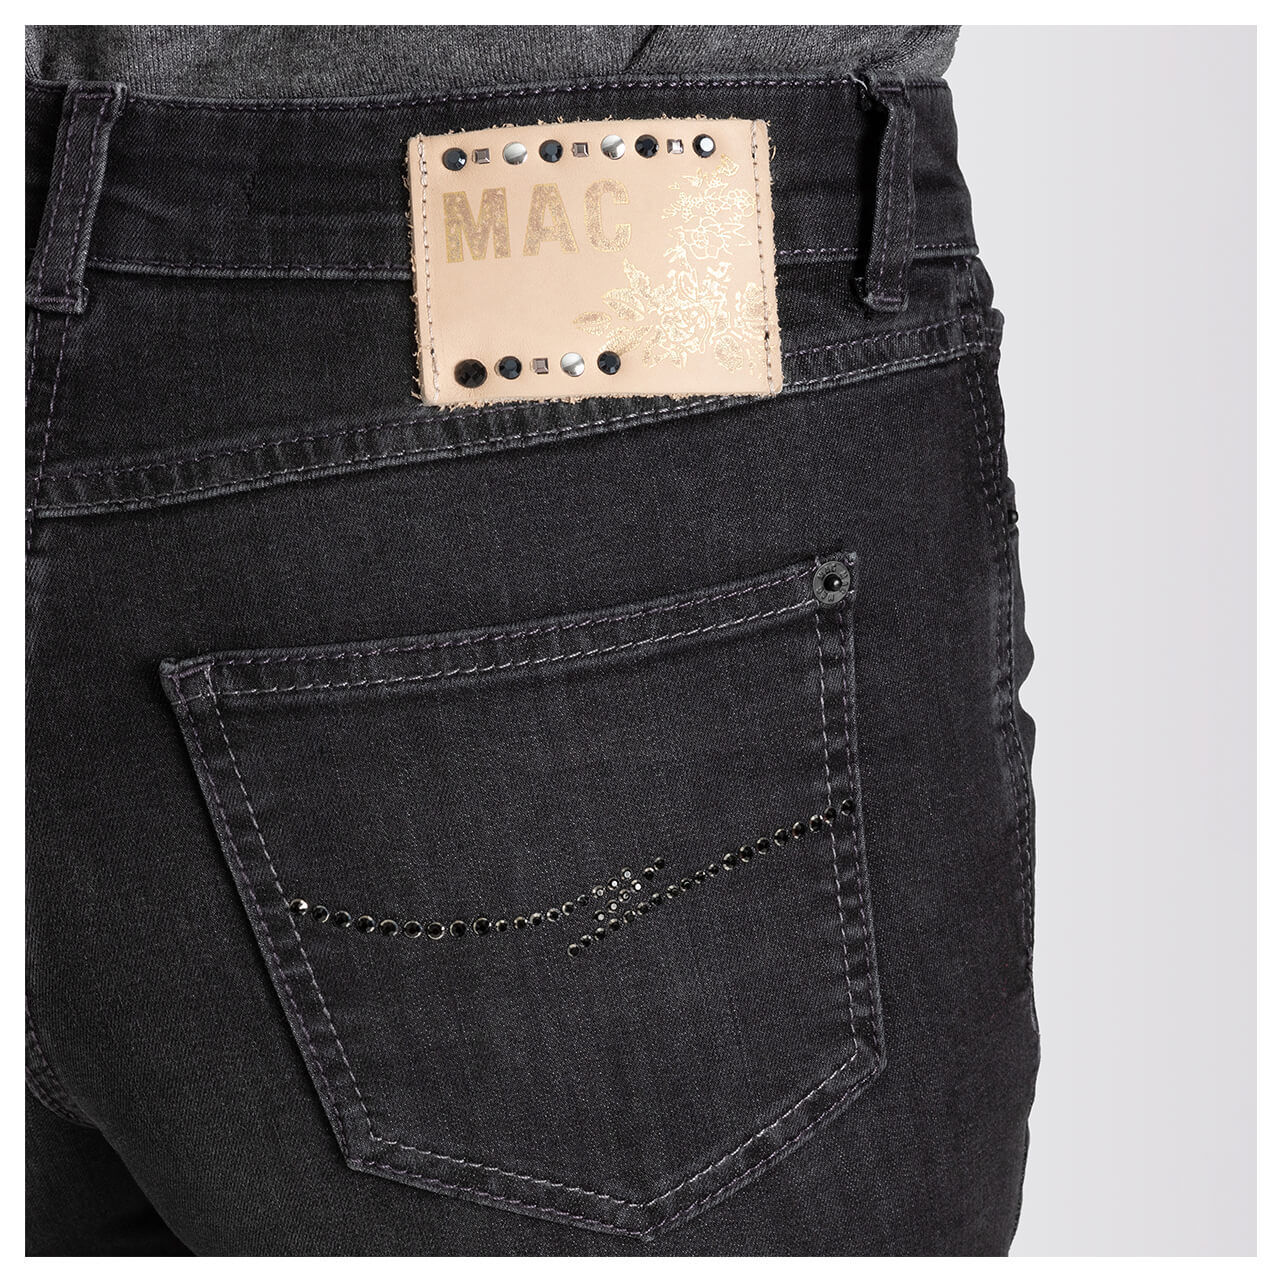 MAC Angela Jeans Strass dusty black wash sparkle